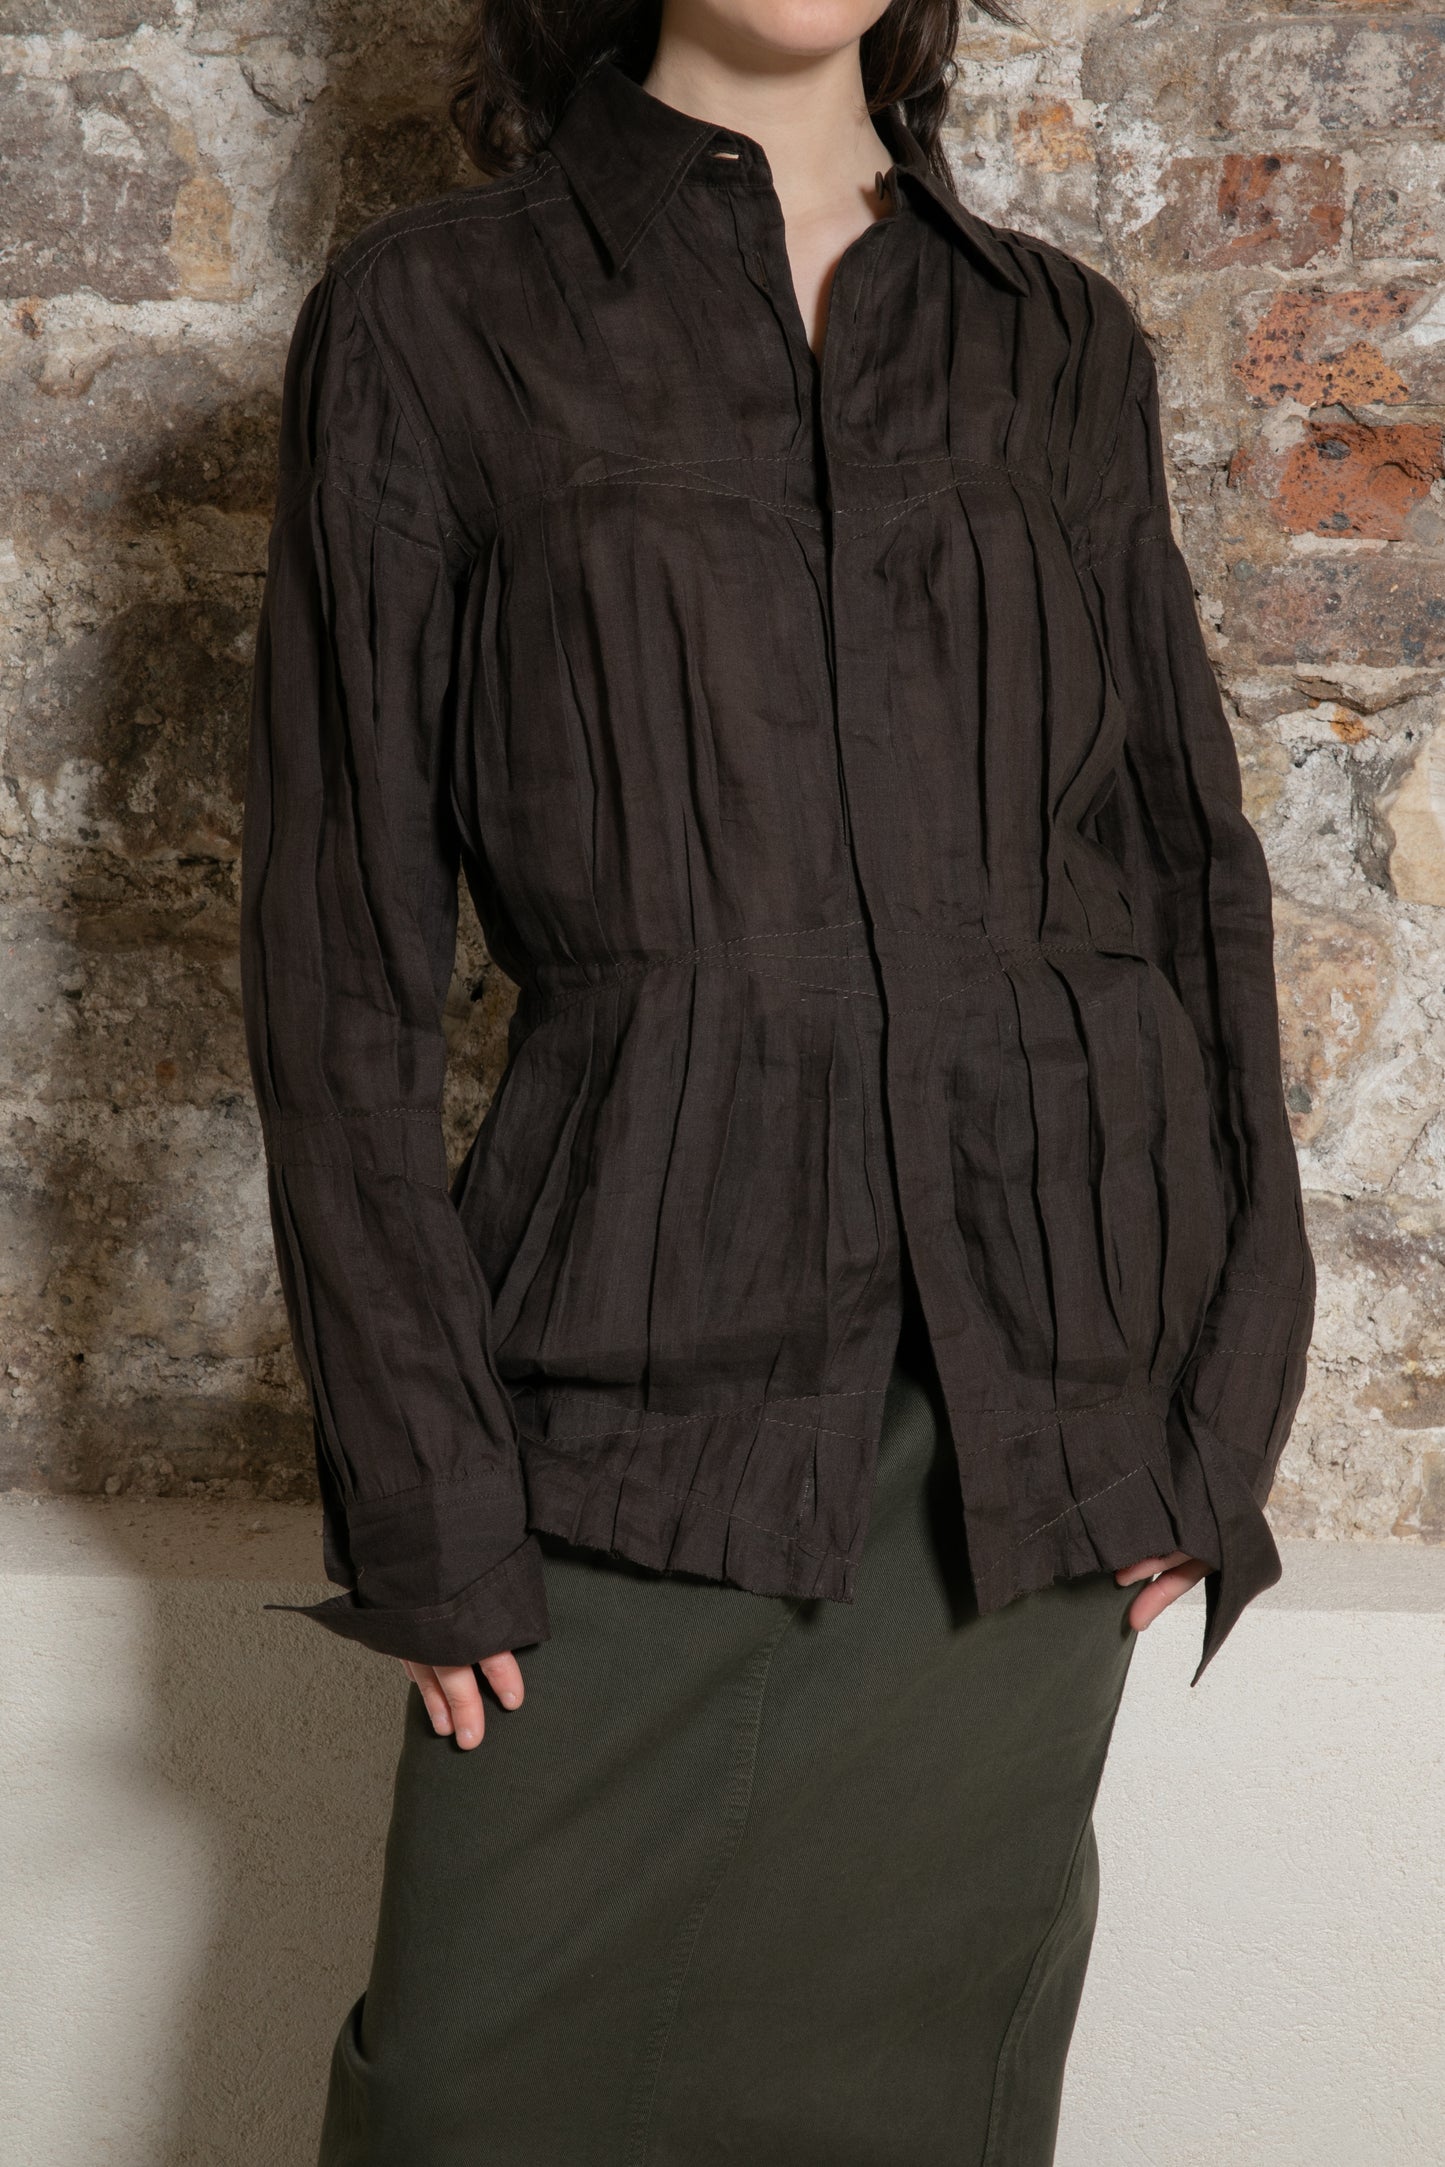 Jean Paul Gaultier - FW 2002 Folded Brown Shirt